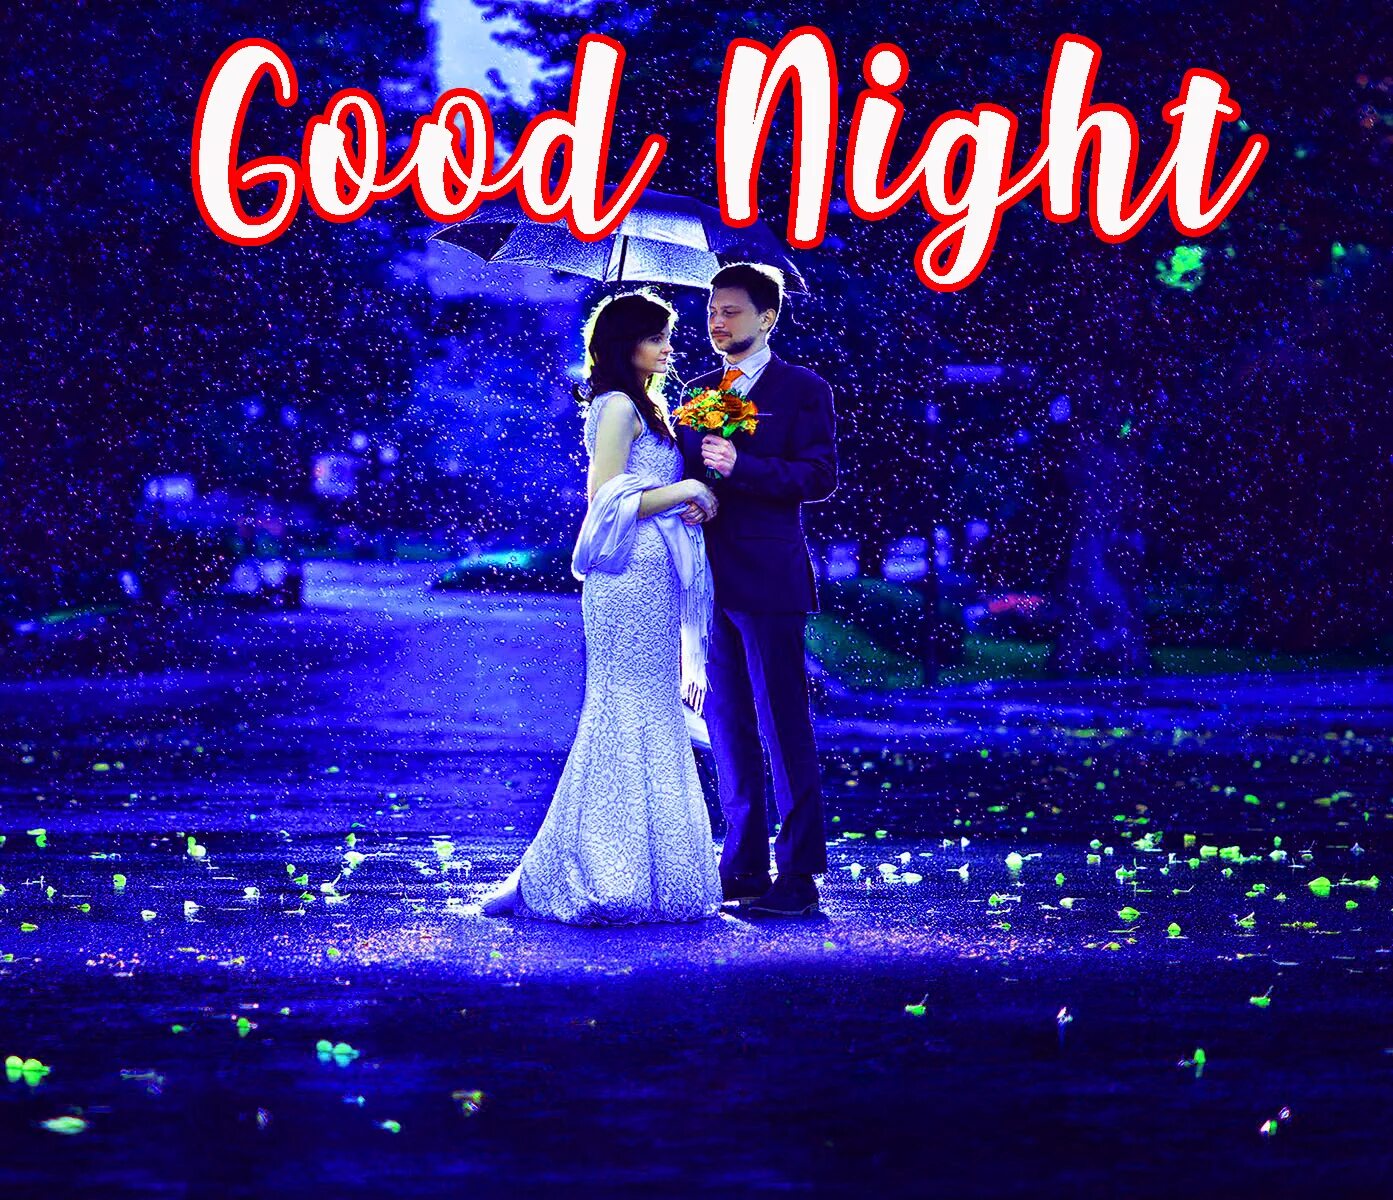 Good Night!. Good Night картинки. Good Night Romantic. Good Night Wallpaper. Night romance